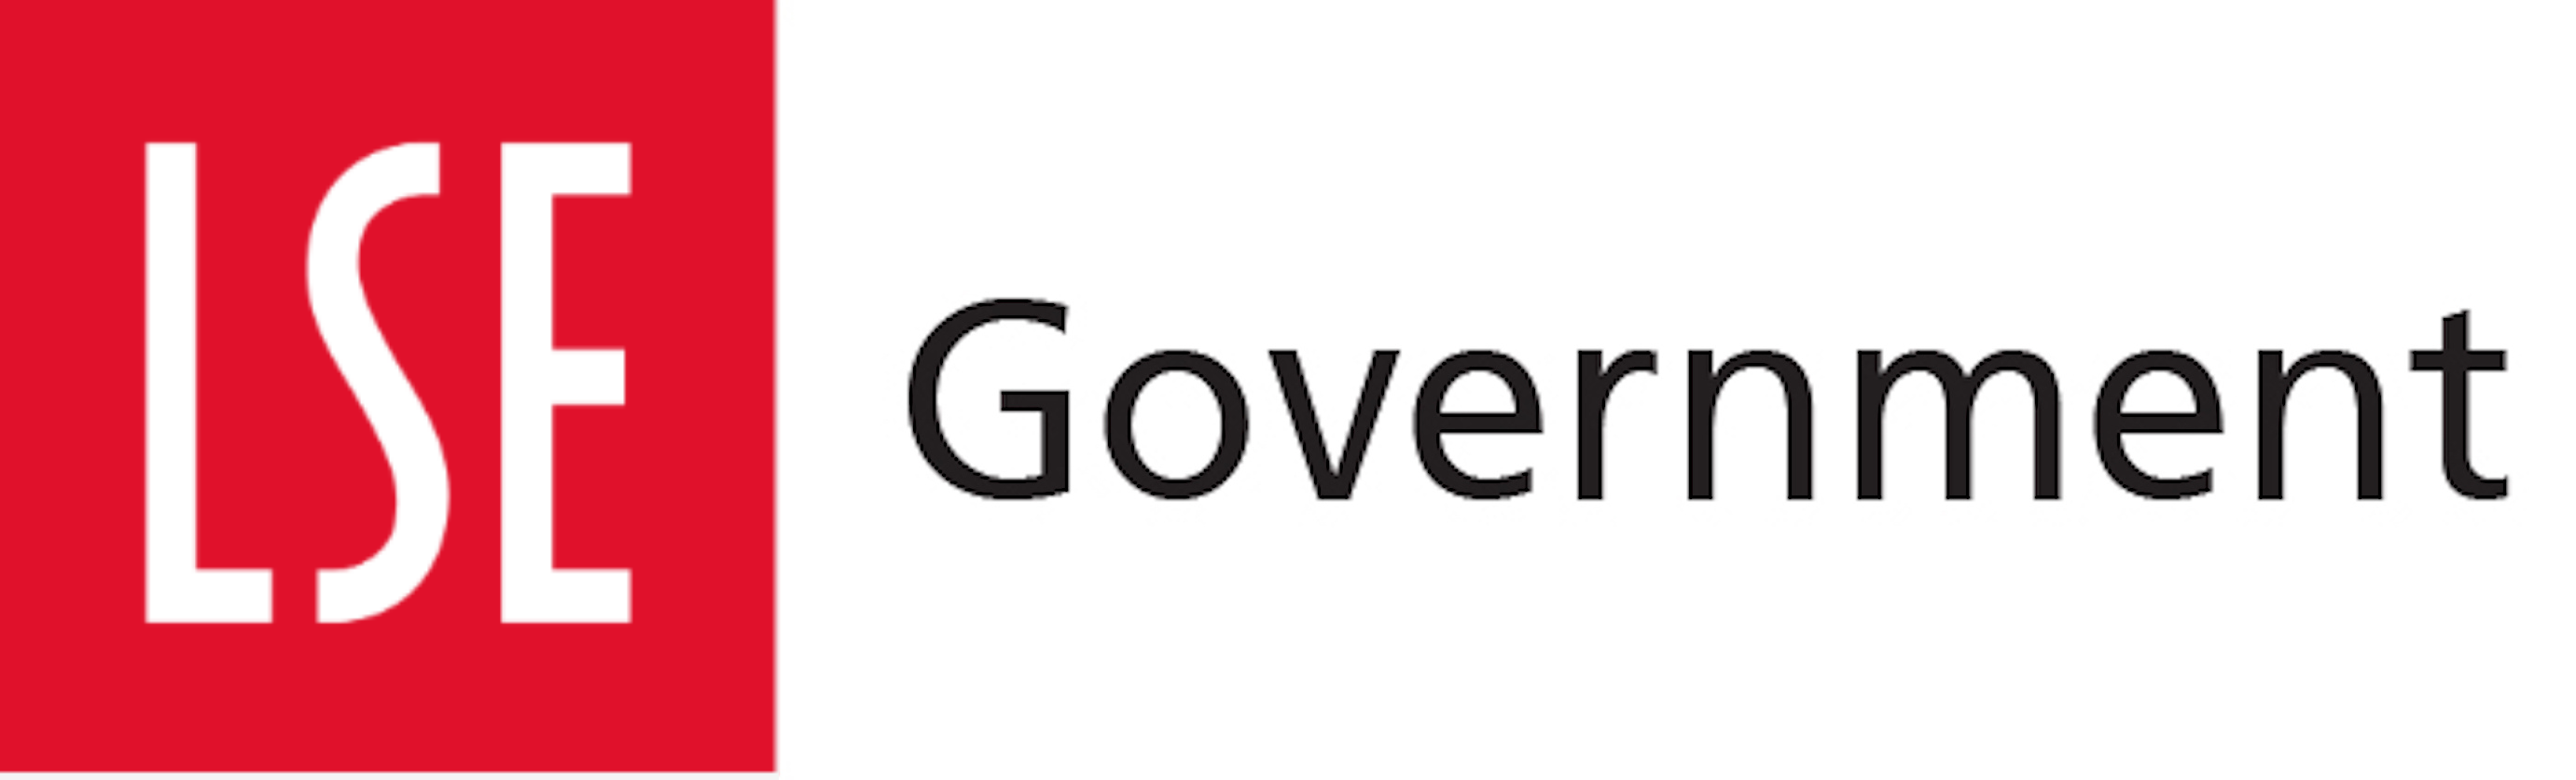 LSE Government Logo